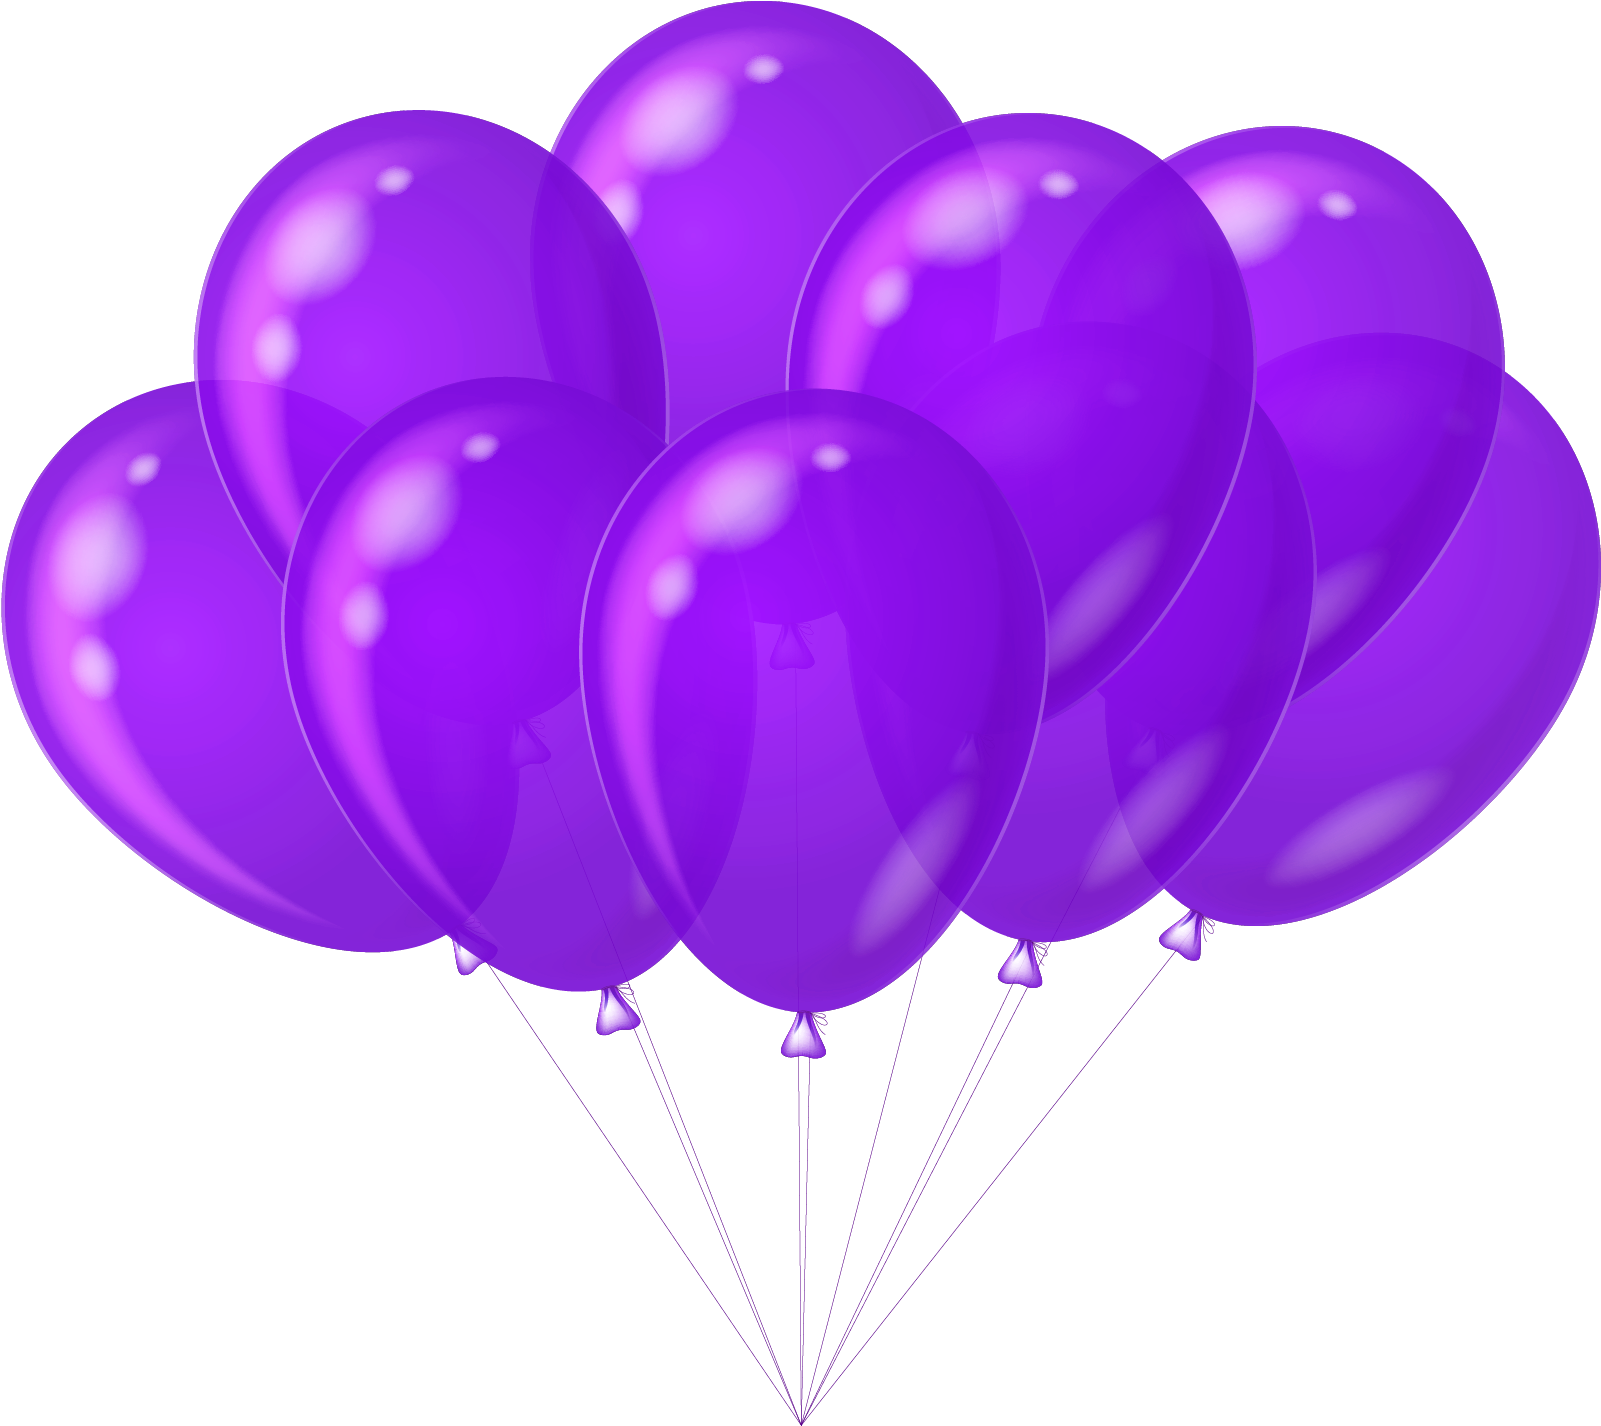 Balloon Arrangements Images - Purple Balloons Clipart (1701x1533)